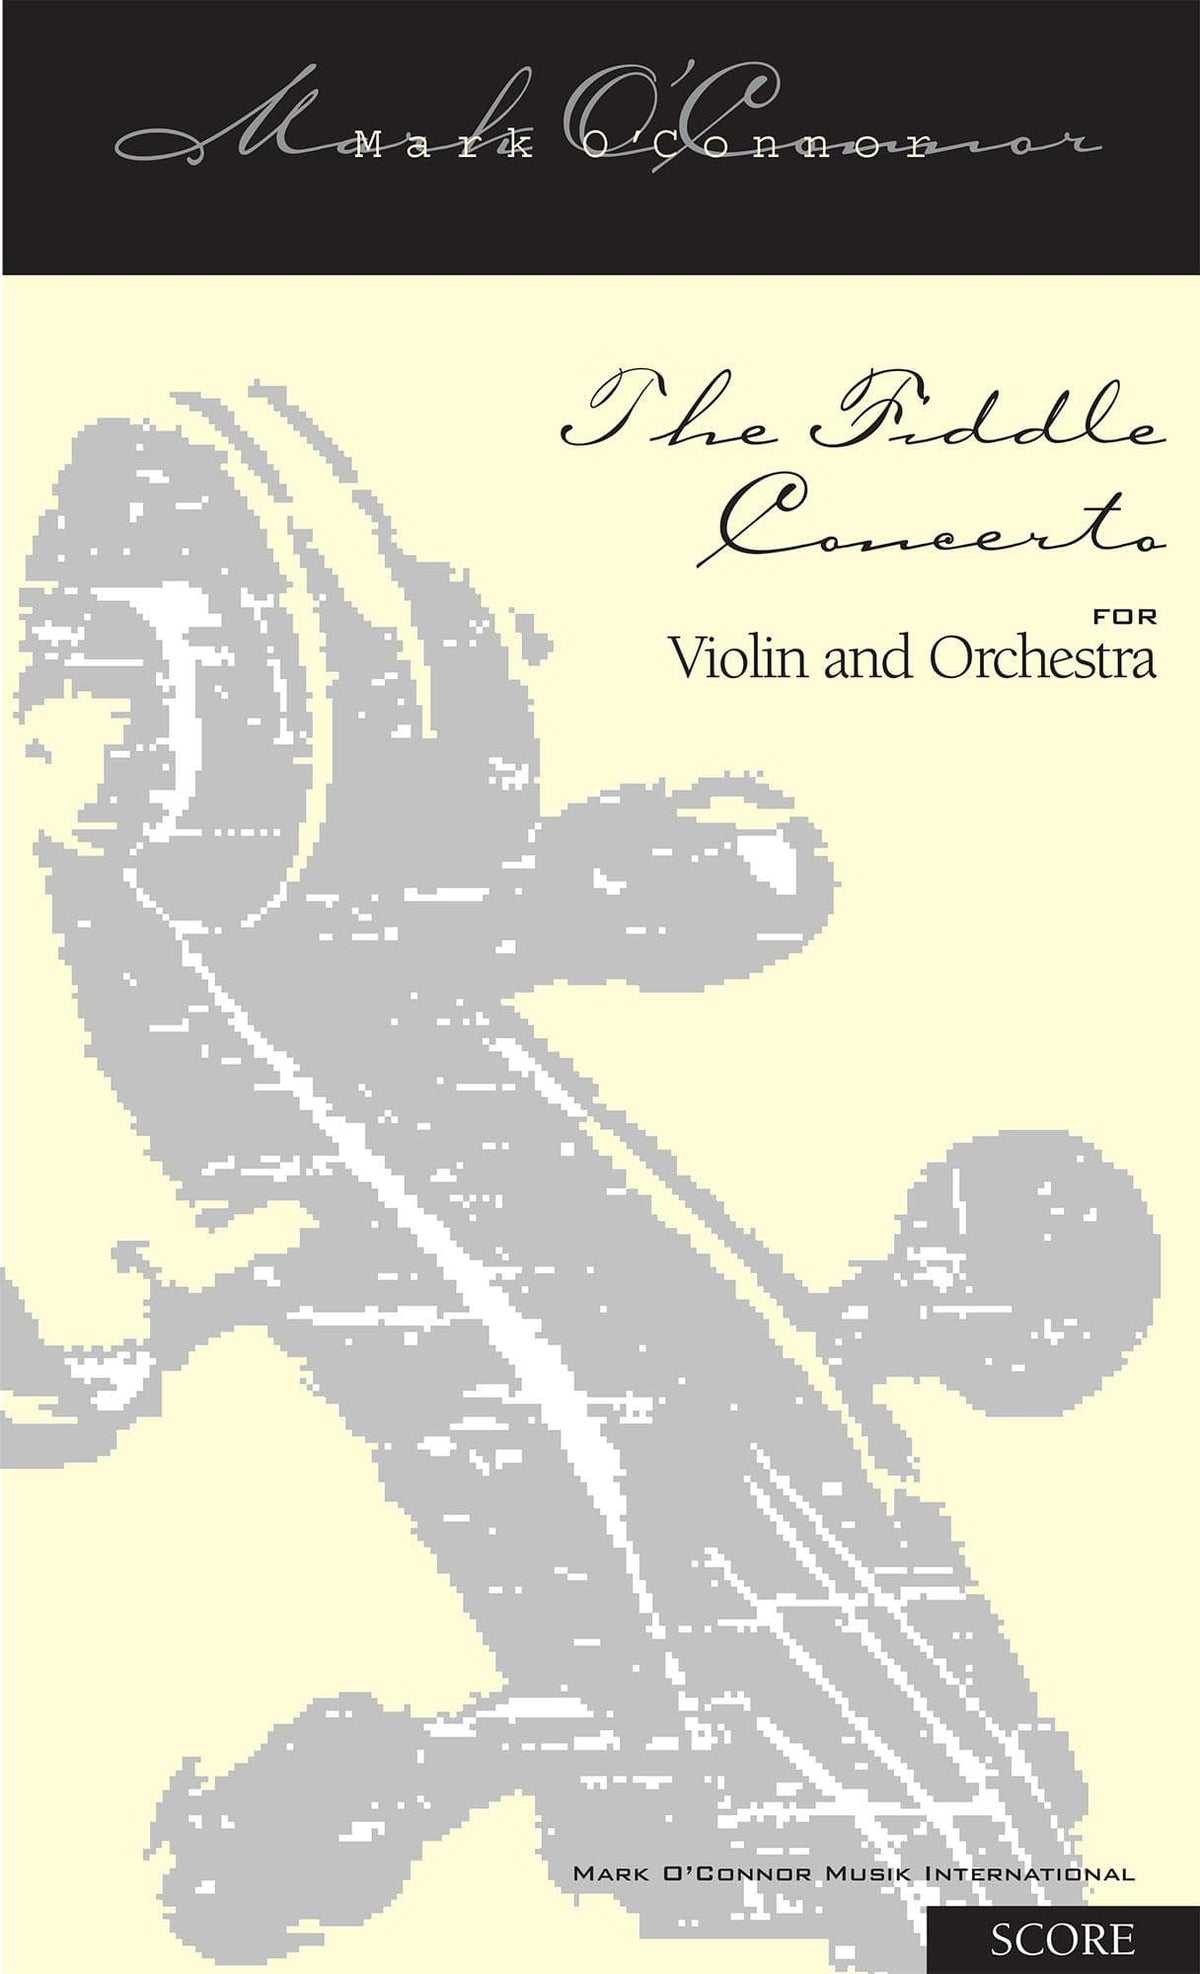 O'Connor, Mark - The FIDDLE CONCERTO for Violin and Orchestra - Score - Digital Download